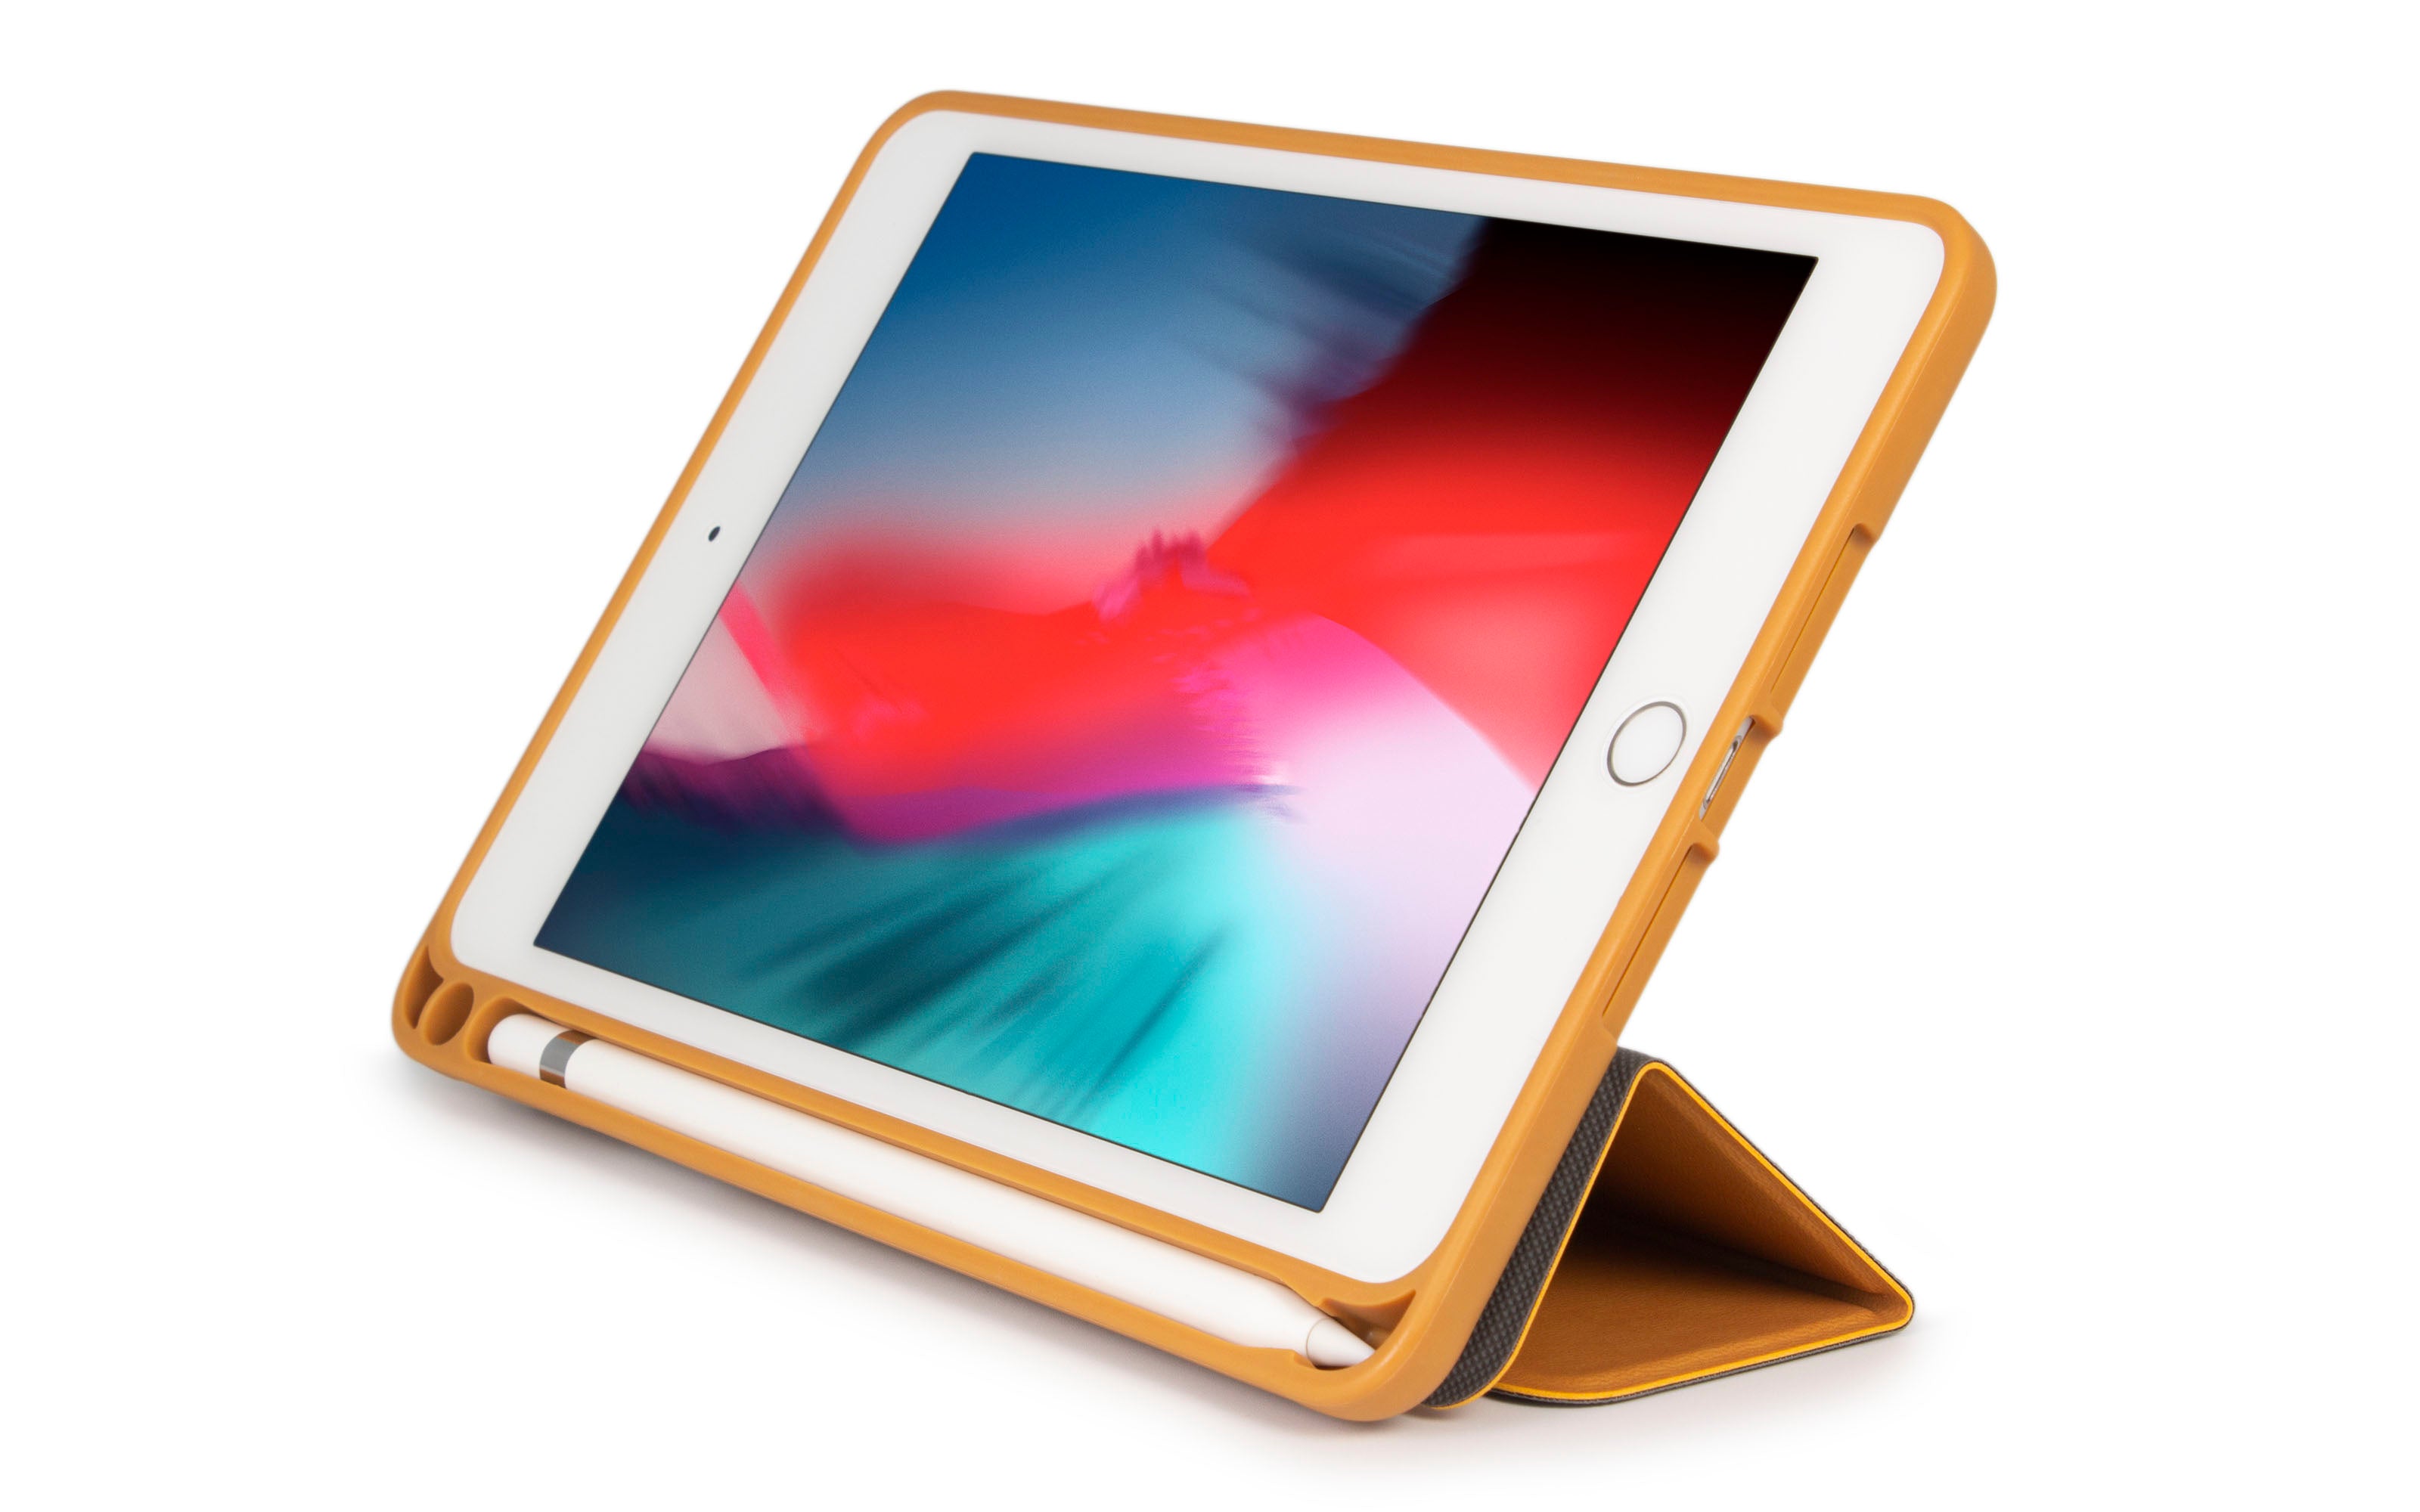 Torrii Torrio Plus Wallet For iPad Mini 5 2019 With Apple Pencil Slot - Brown